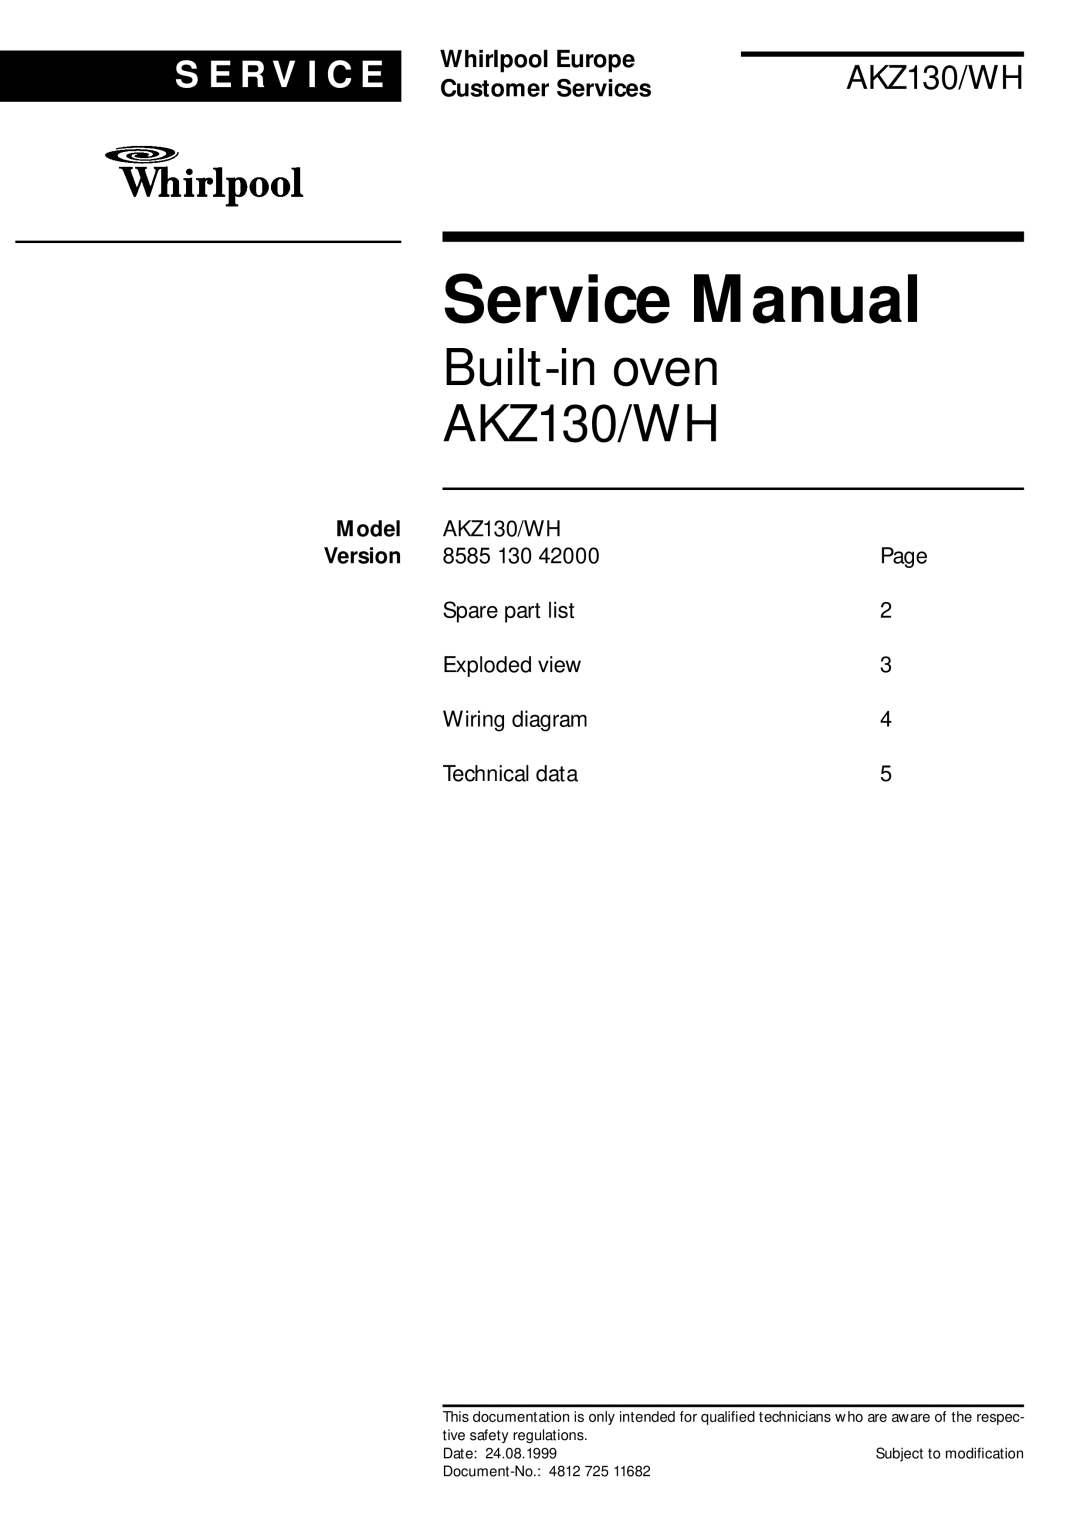 Whirlpool AKM 250 WH service manual Model, Gas hob AKM 250/WH, S E R V I C E, Whirlpool Europe, Customer Services 